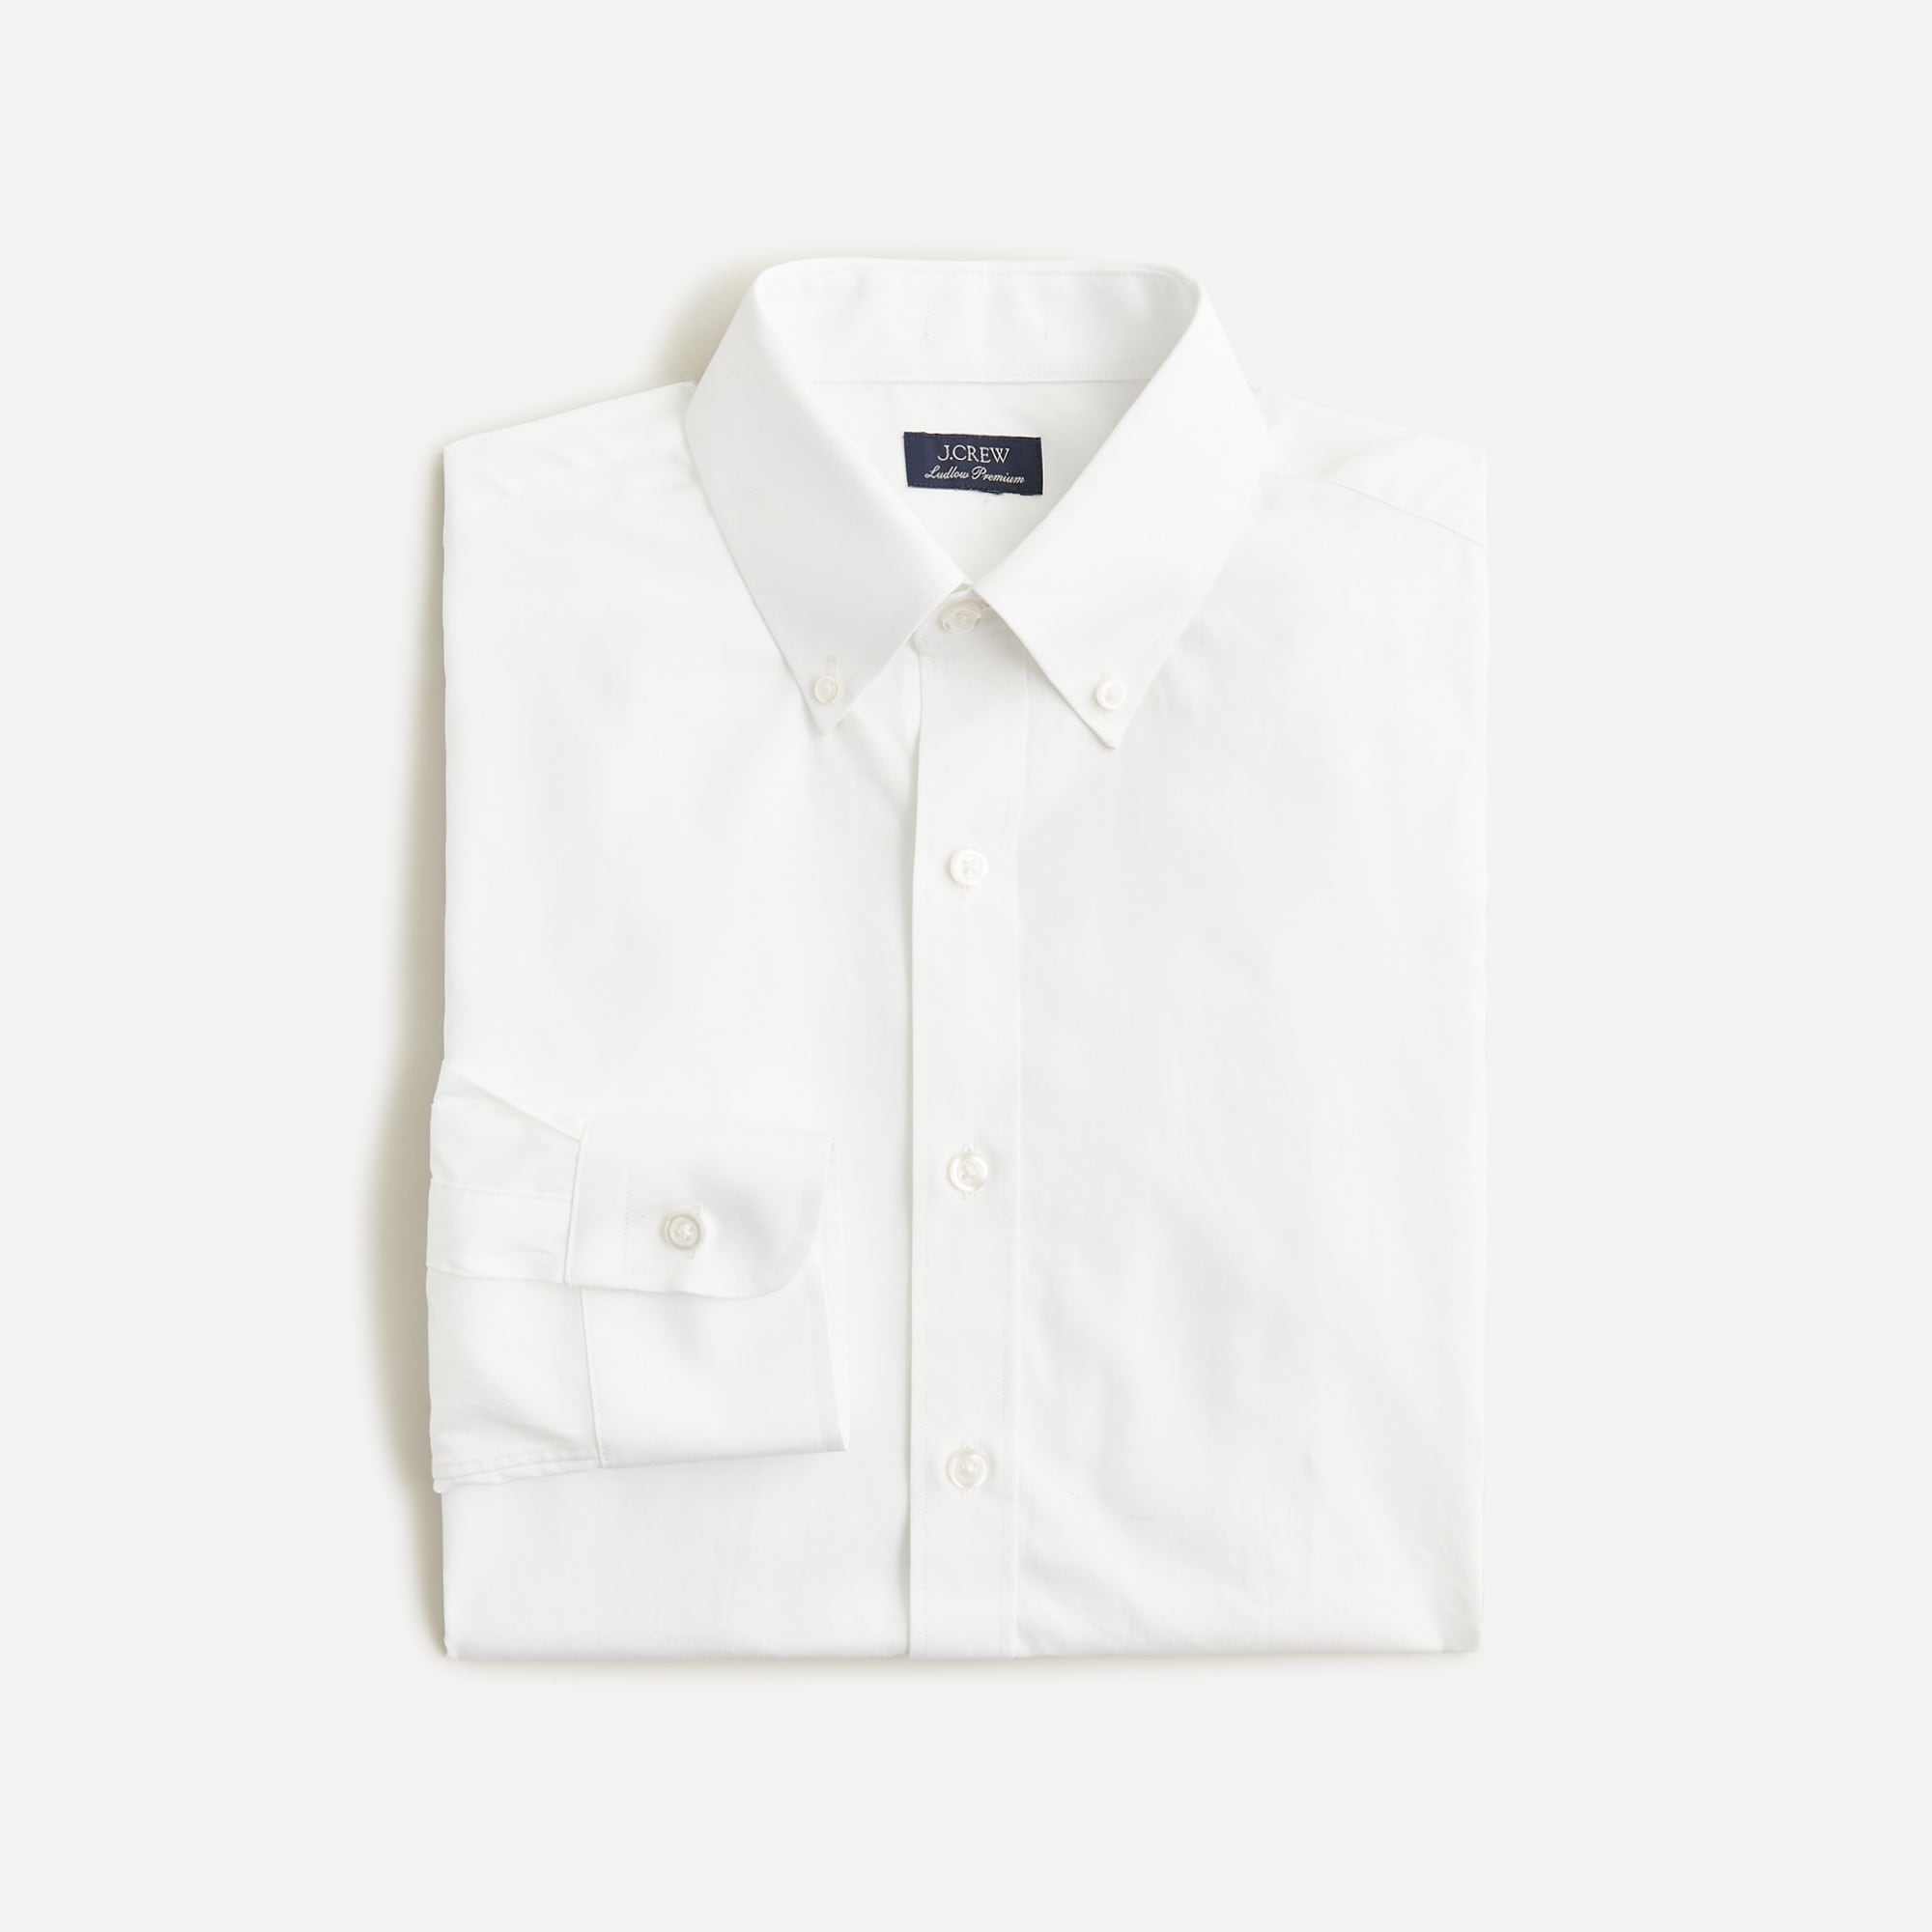 Jcrew Ludlow Premium fine cotton dress shirt with button-down collar